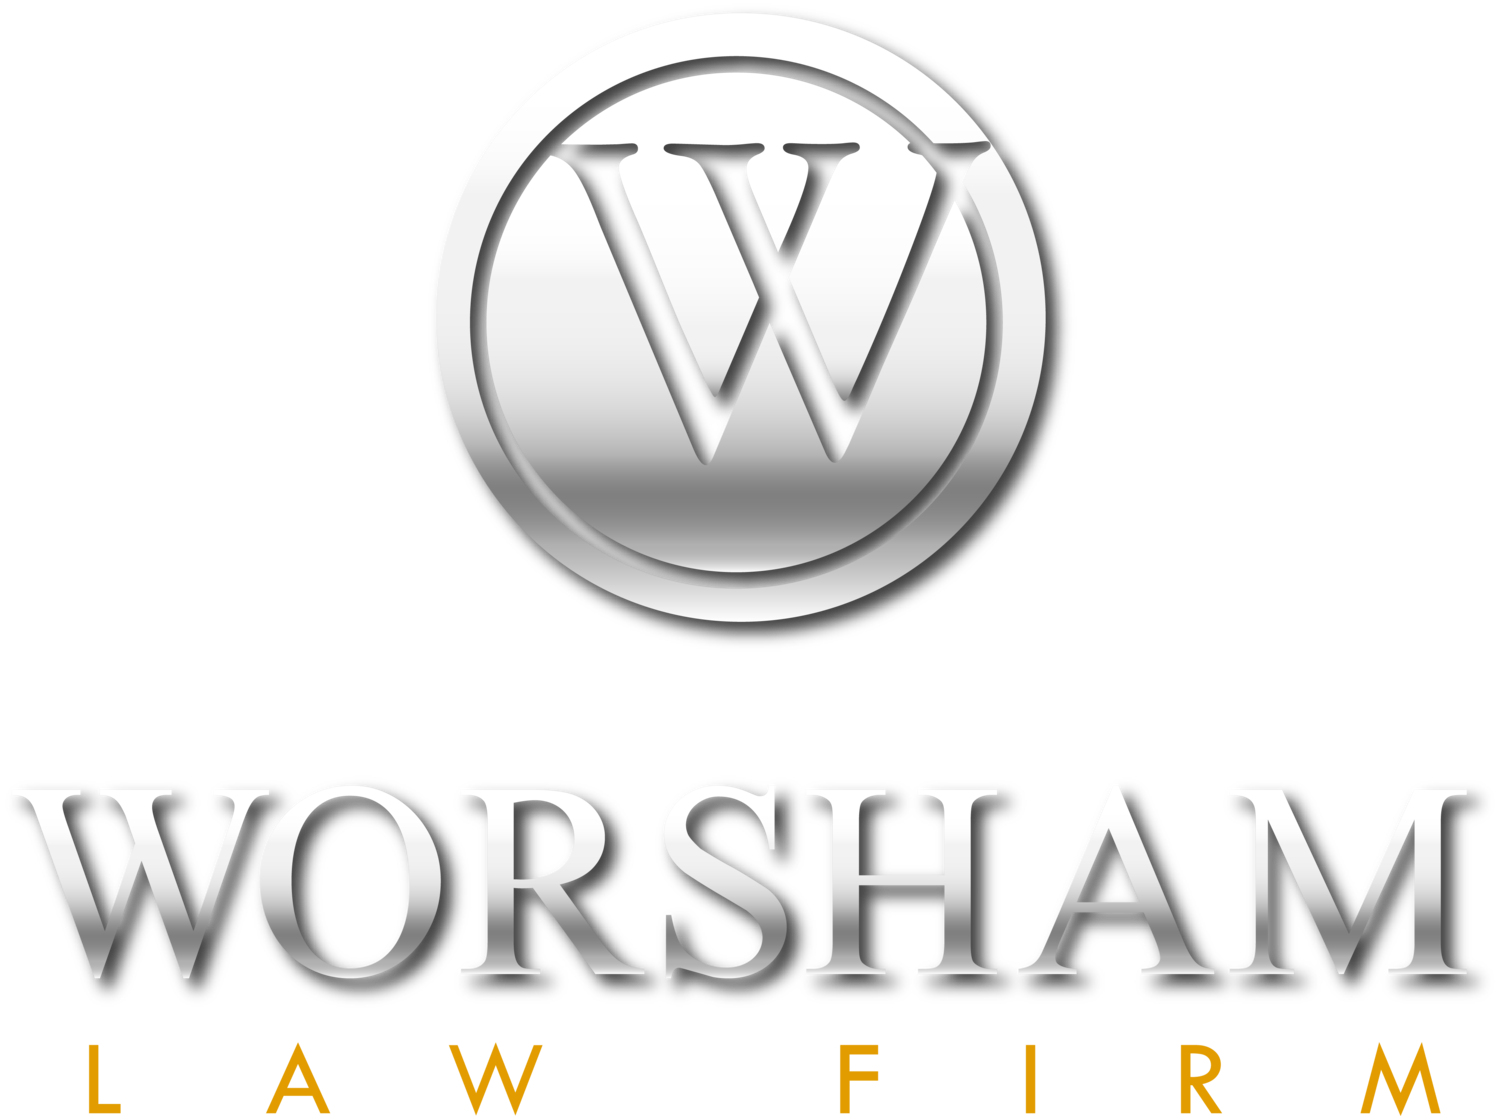 Worsham Law Firm